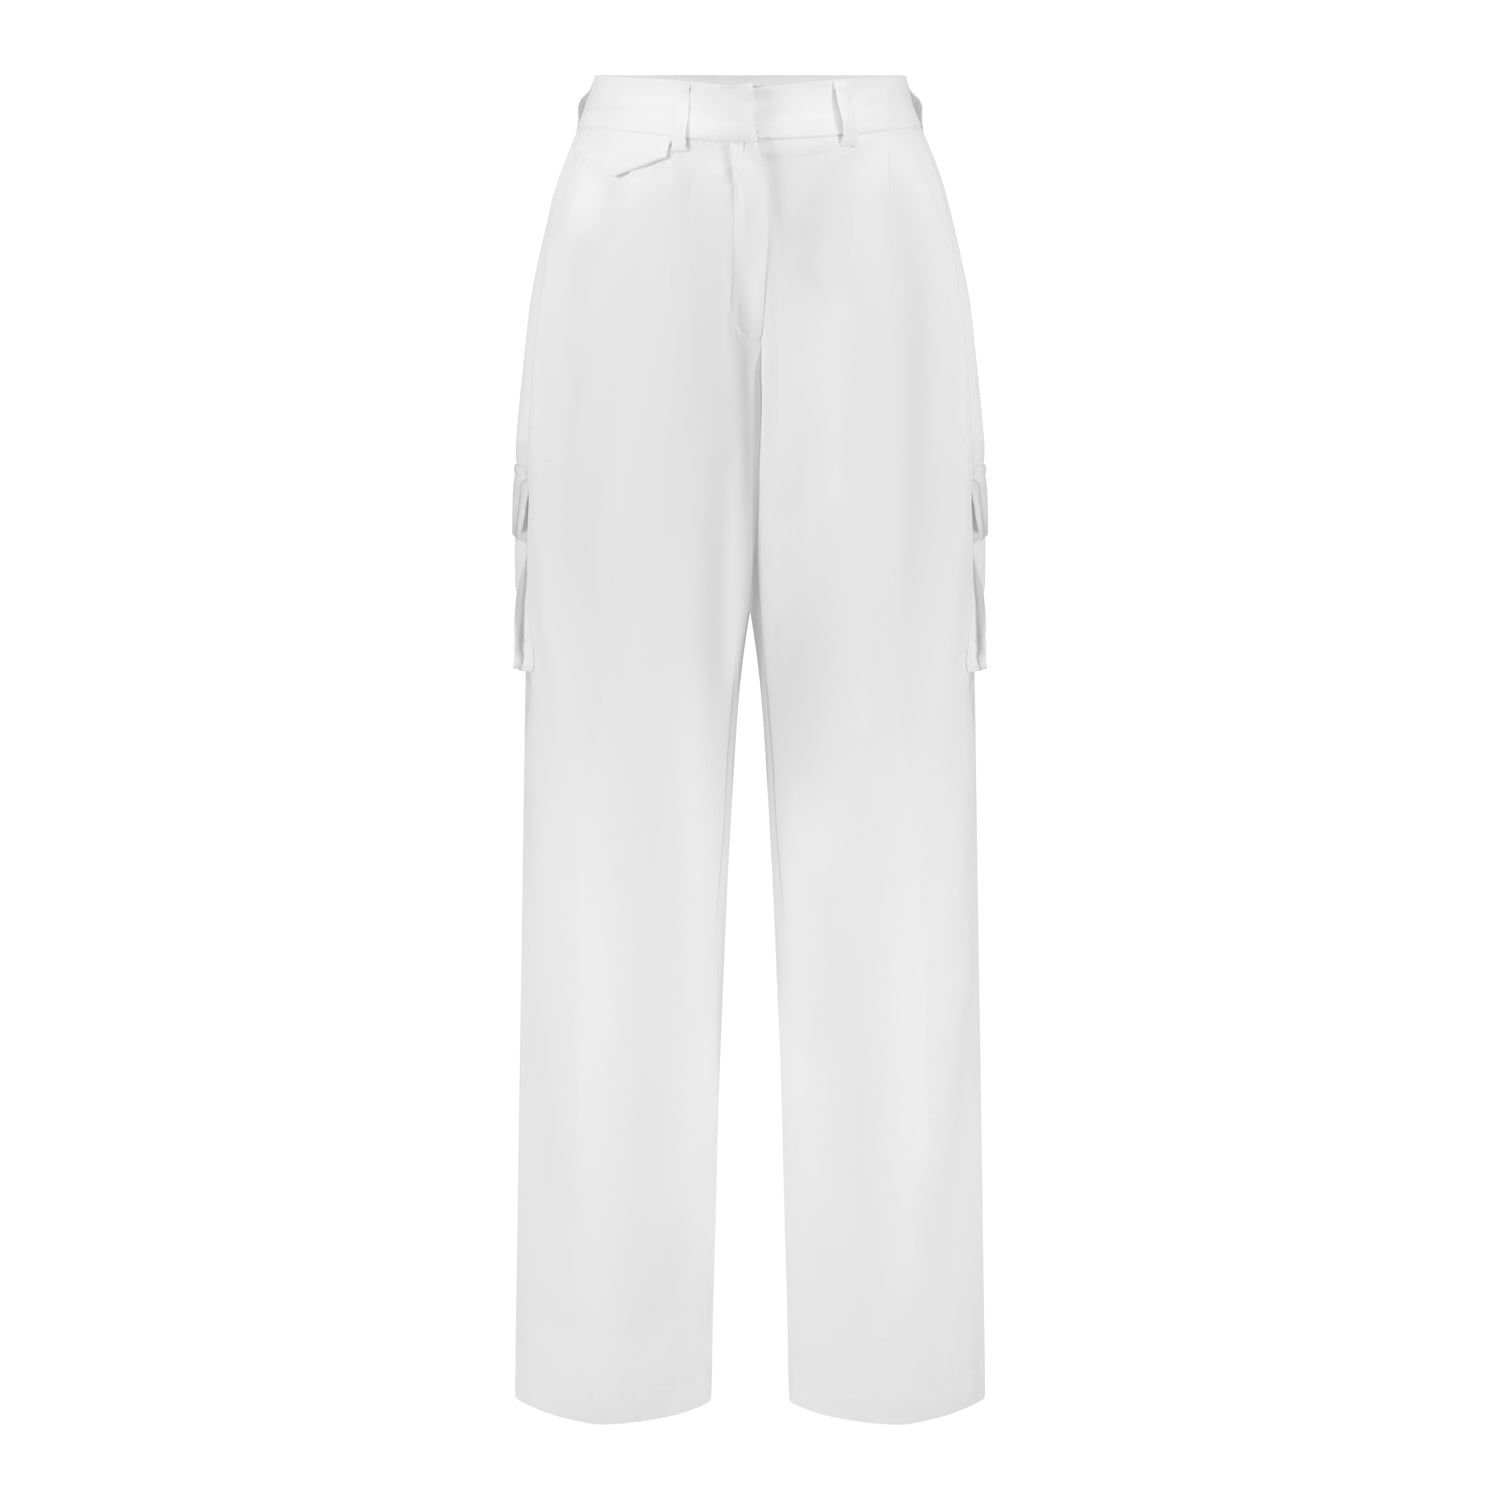 White pocket palazzo pants